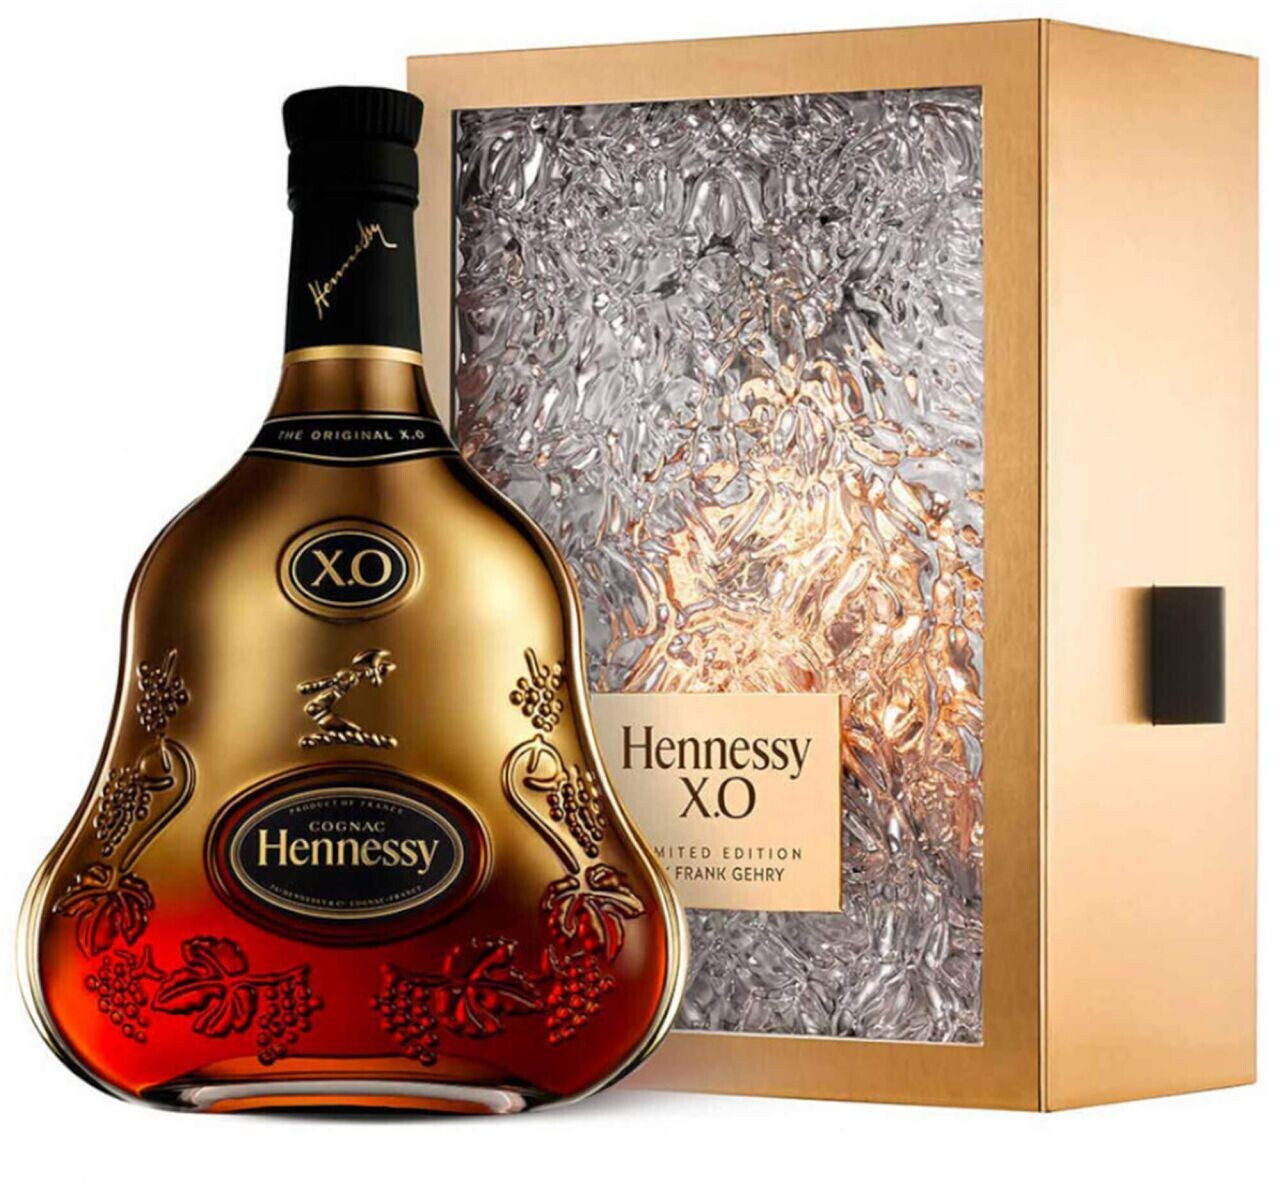 Hennessy XO 0,7l limited Edition Frank Ghery ab 259,99 € | Preisvergleich  bei